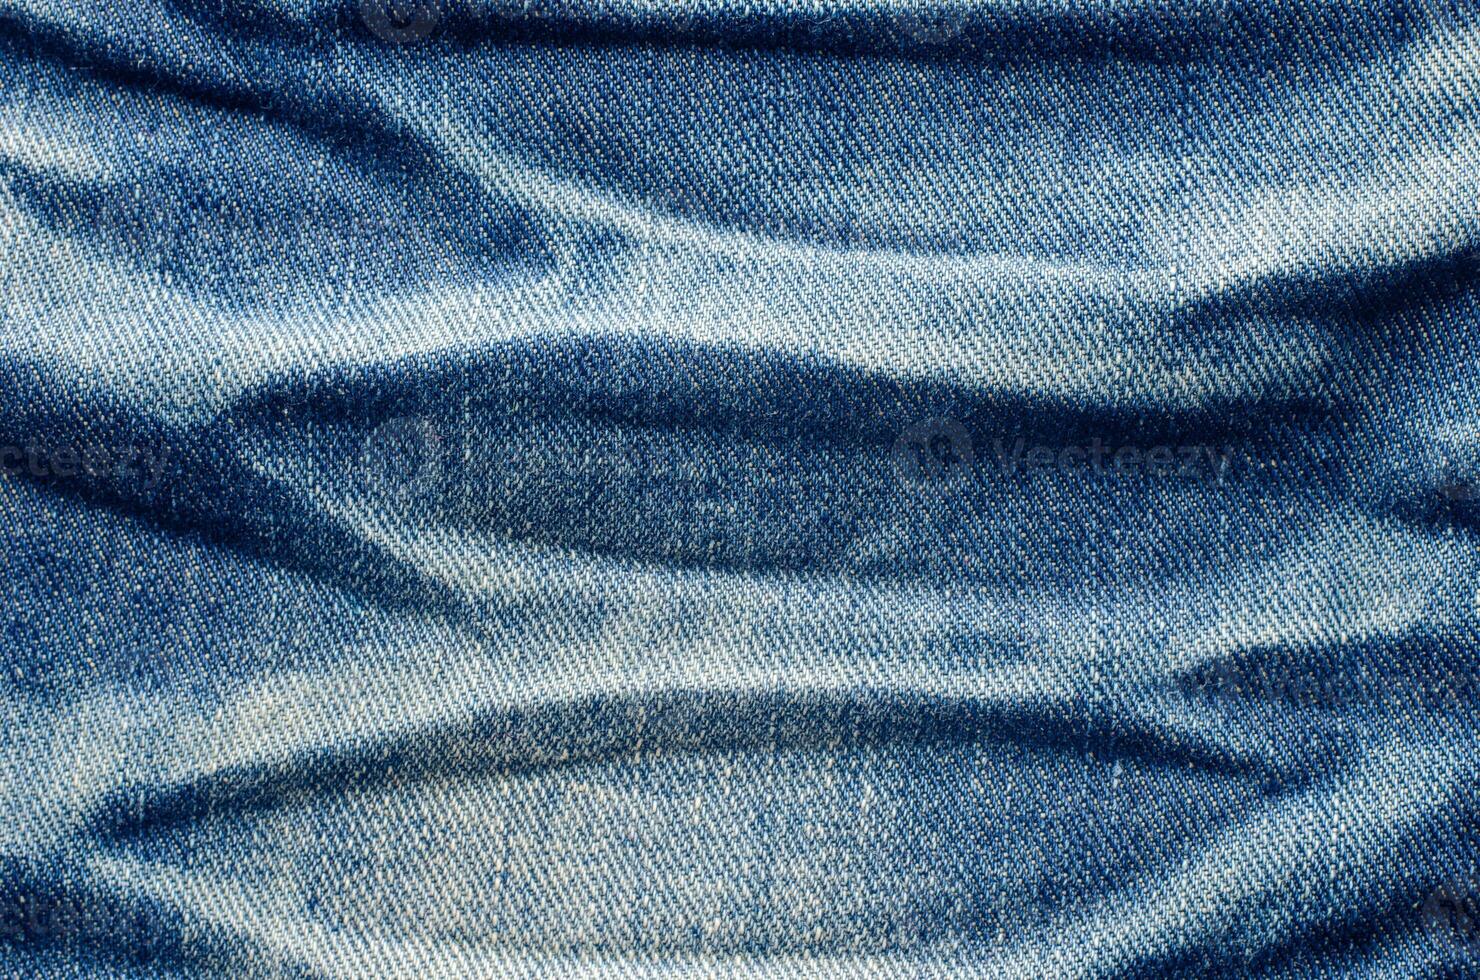 rugas azul jeans textura. jeans fundo. foto